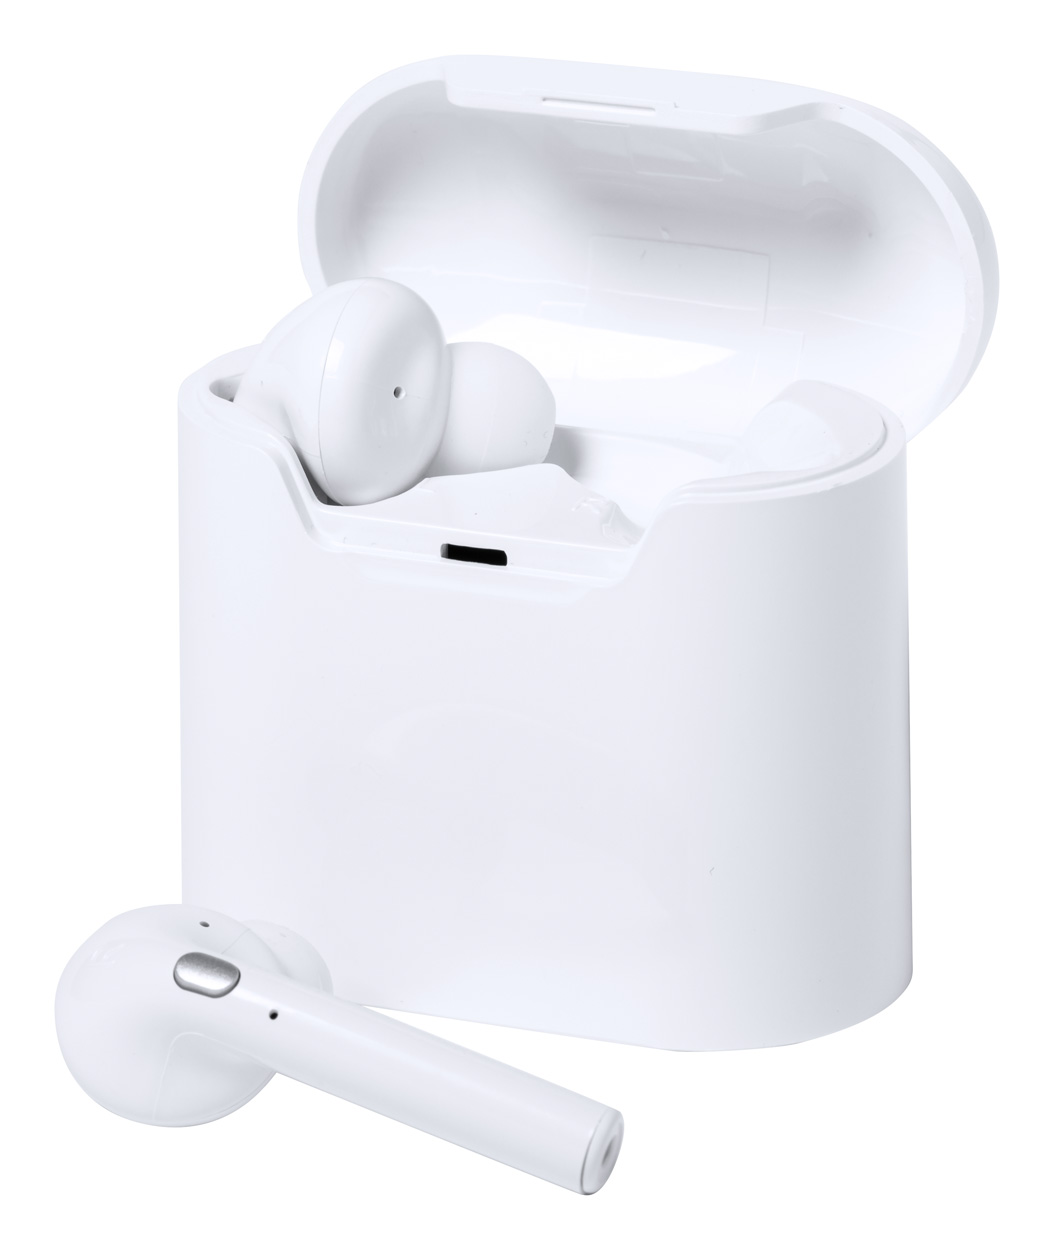 Aniken bluetooth headphones - white